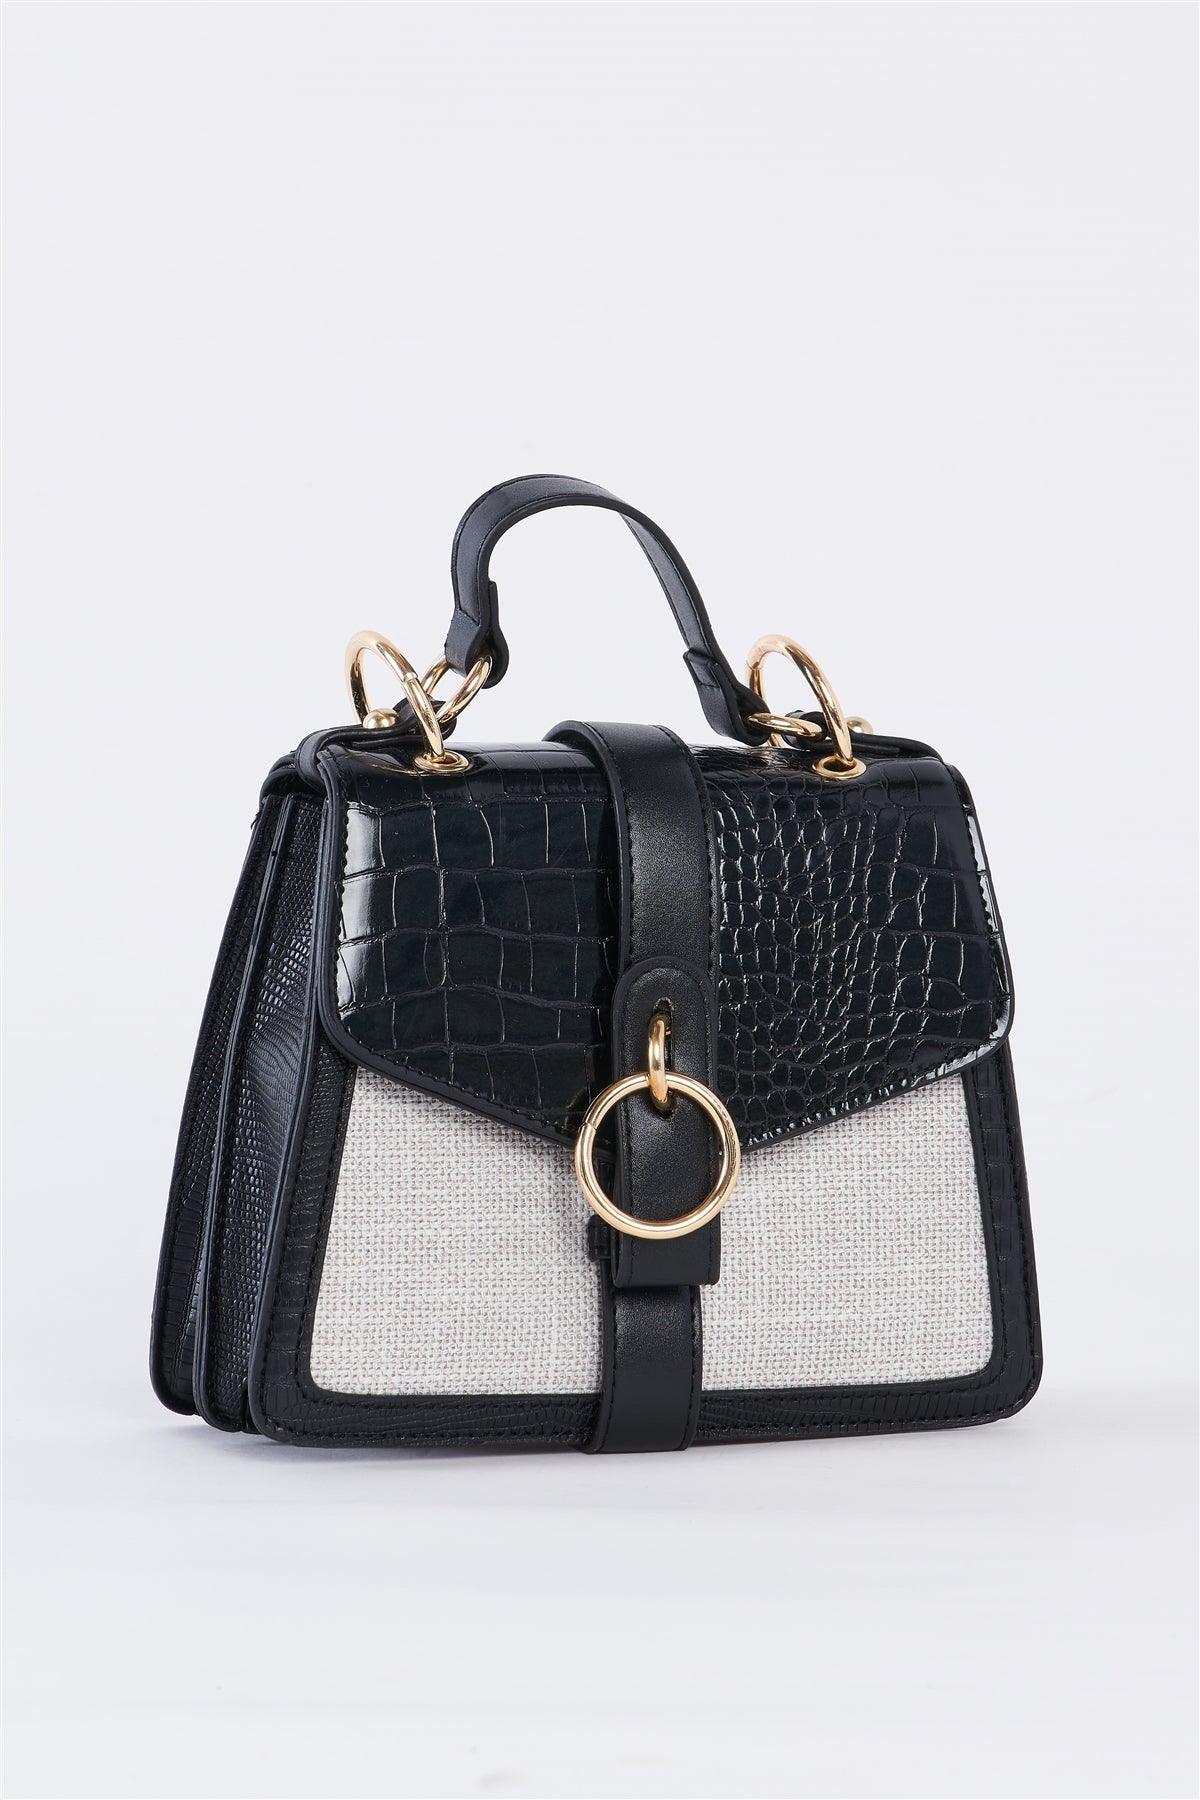 Black & Ivory Retro Inspired Alligator Vegan Leather Bag /3 Bags